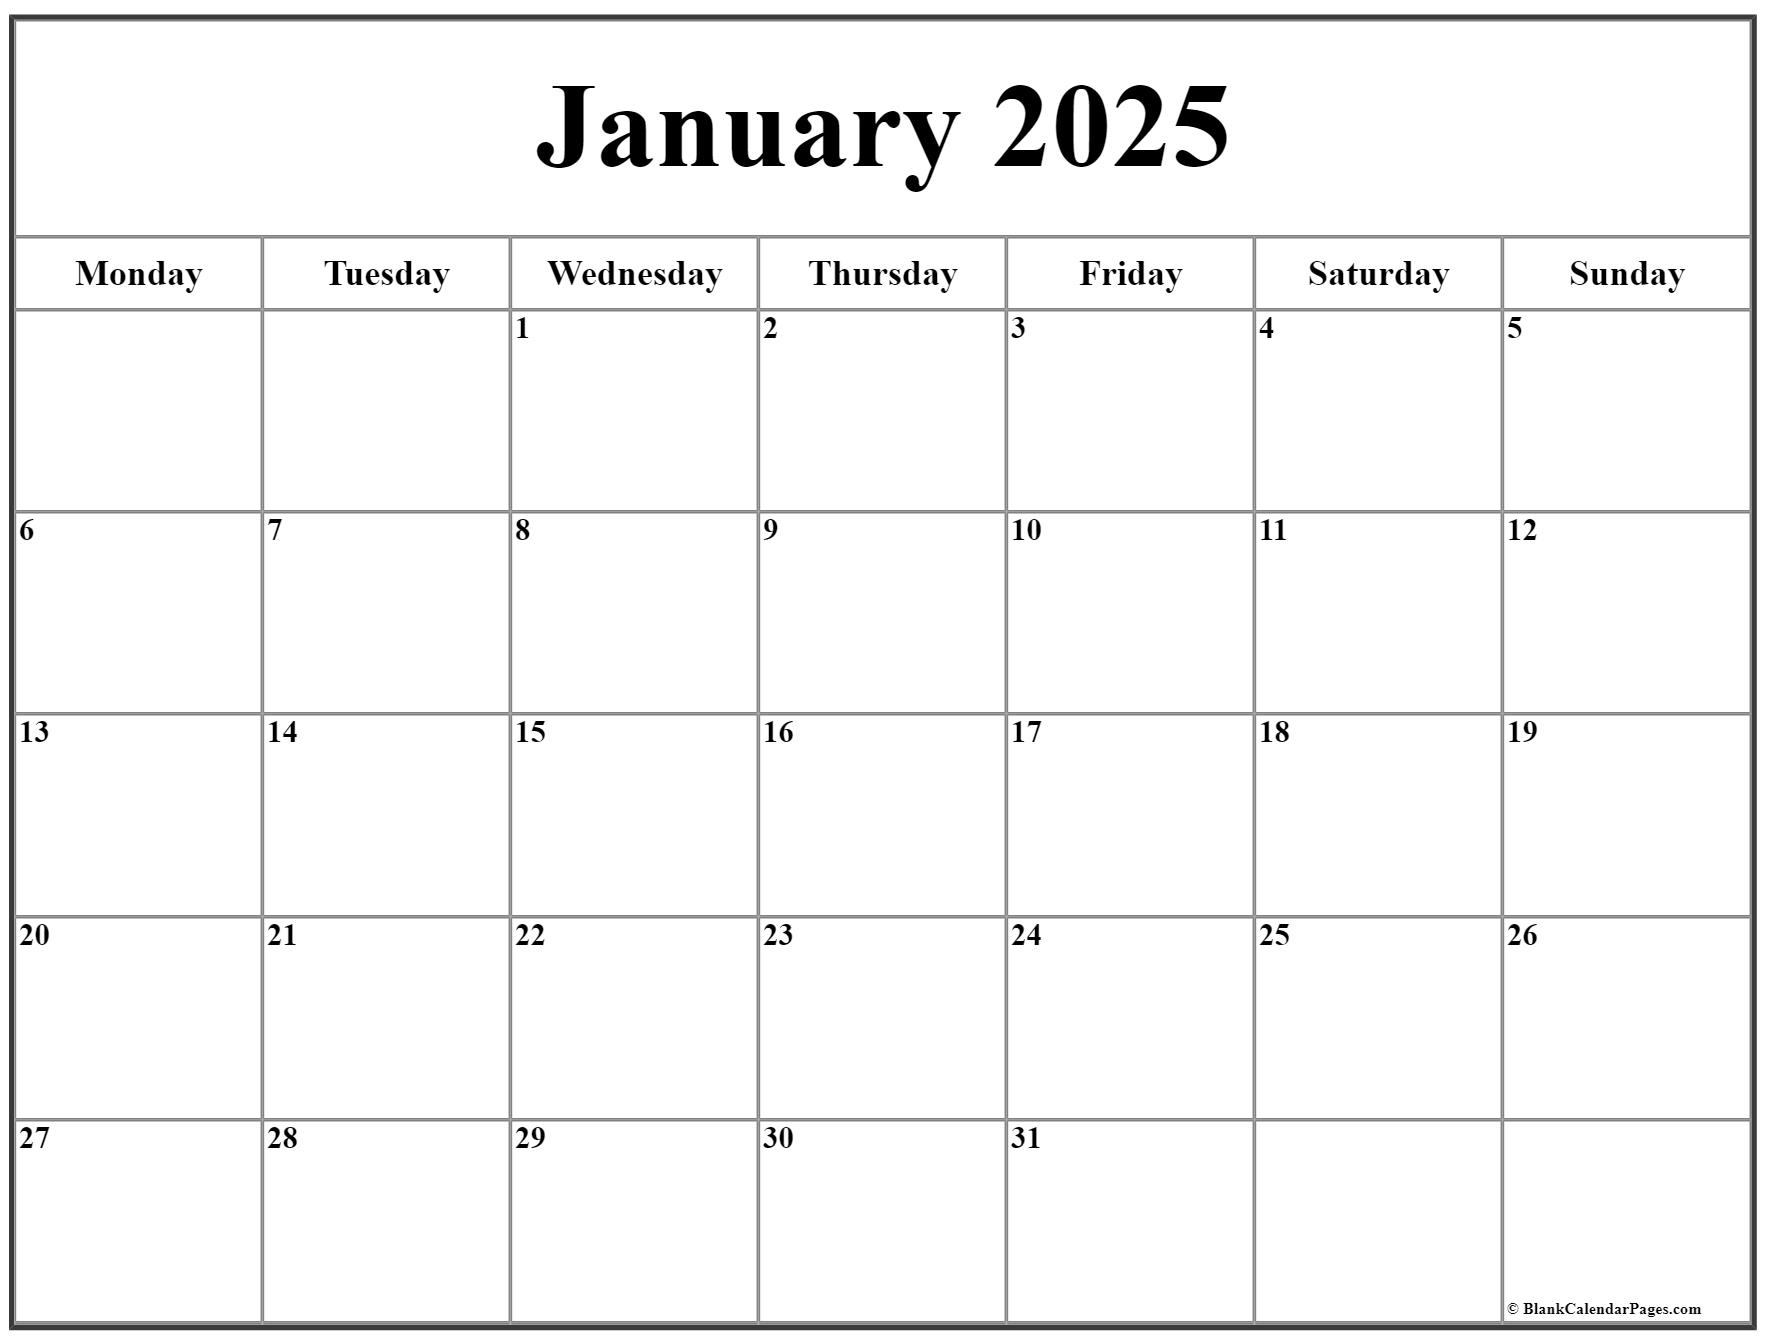 January 2025 Monday Calendar | Monday to Sunday